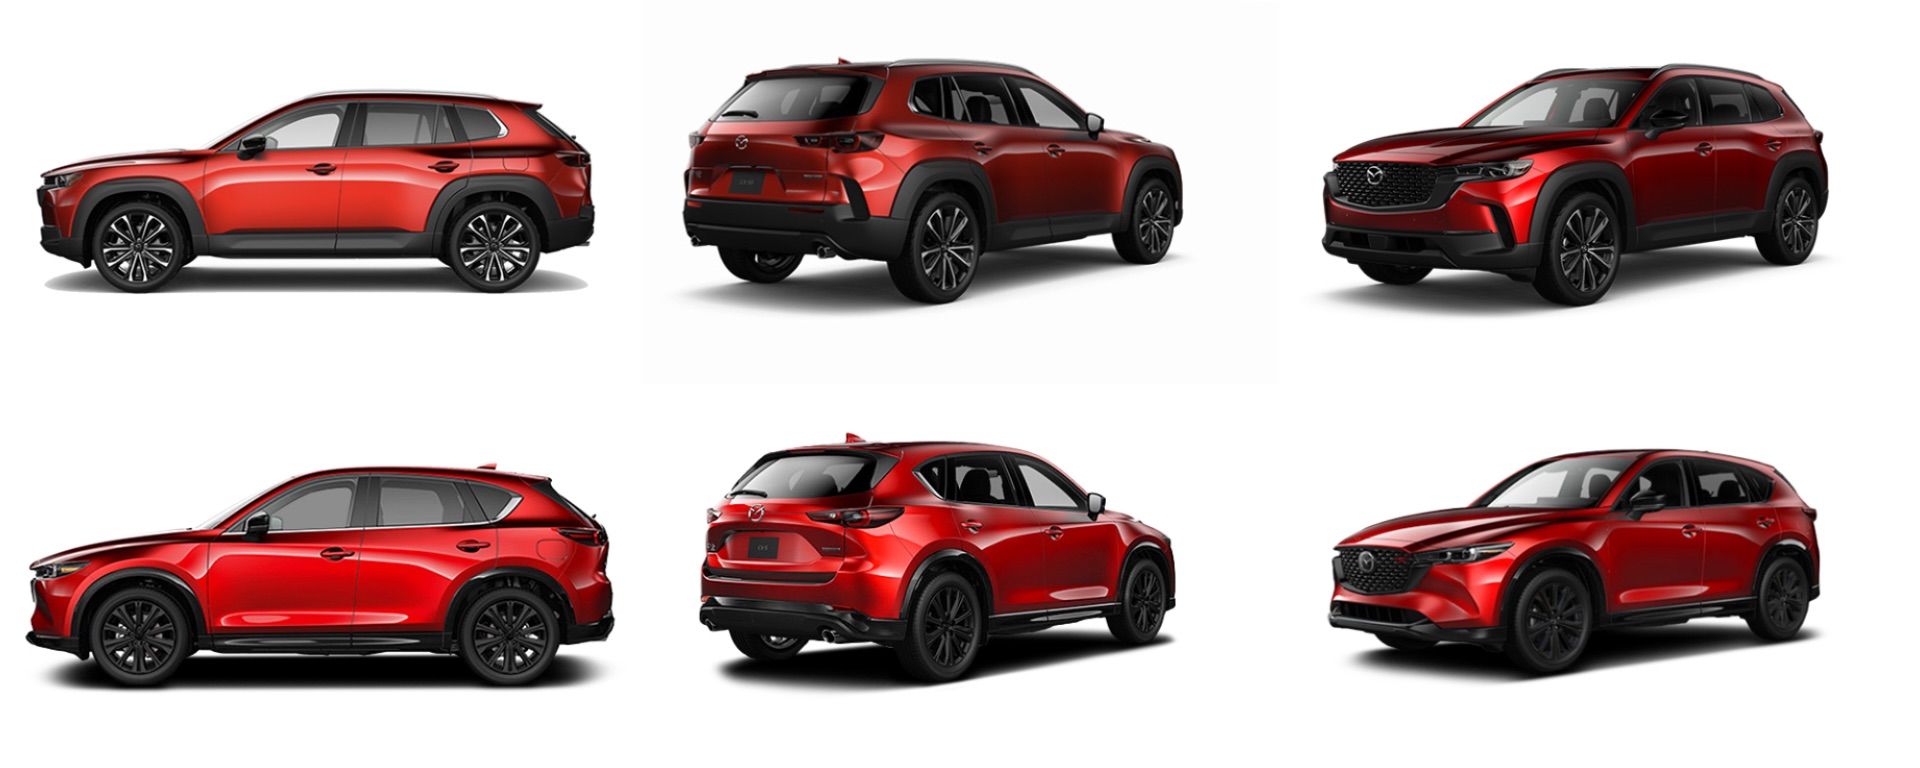 2023 Mazda CX-5 vs 2023 Mazda CX-50 – What's The Difference?